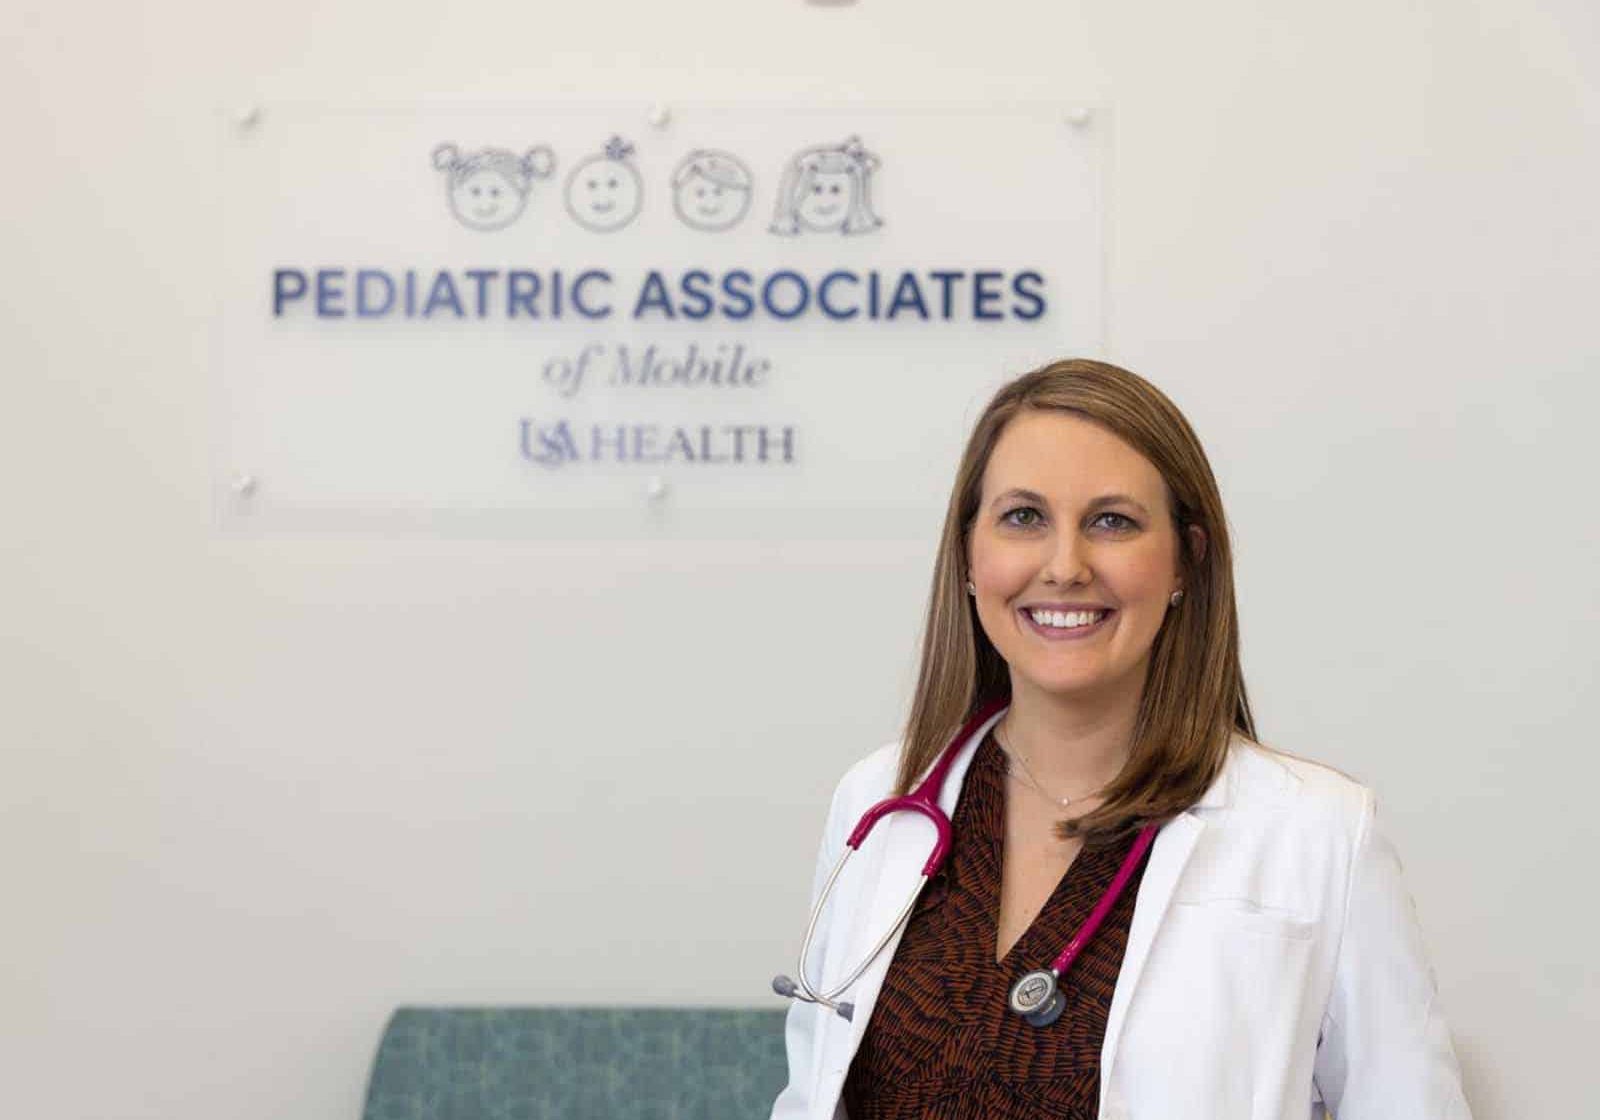 Pediatric Associates Of Mobile/USA Health Adds Physician